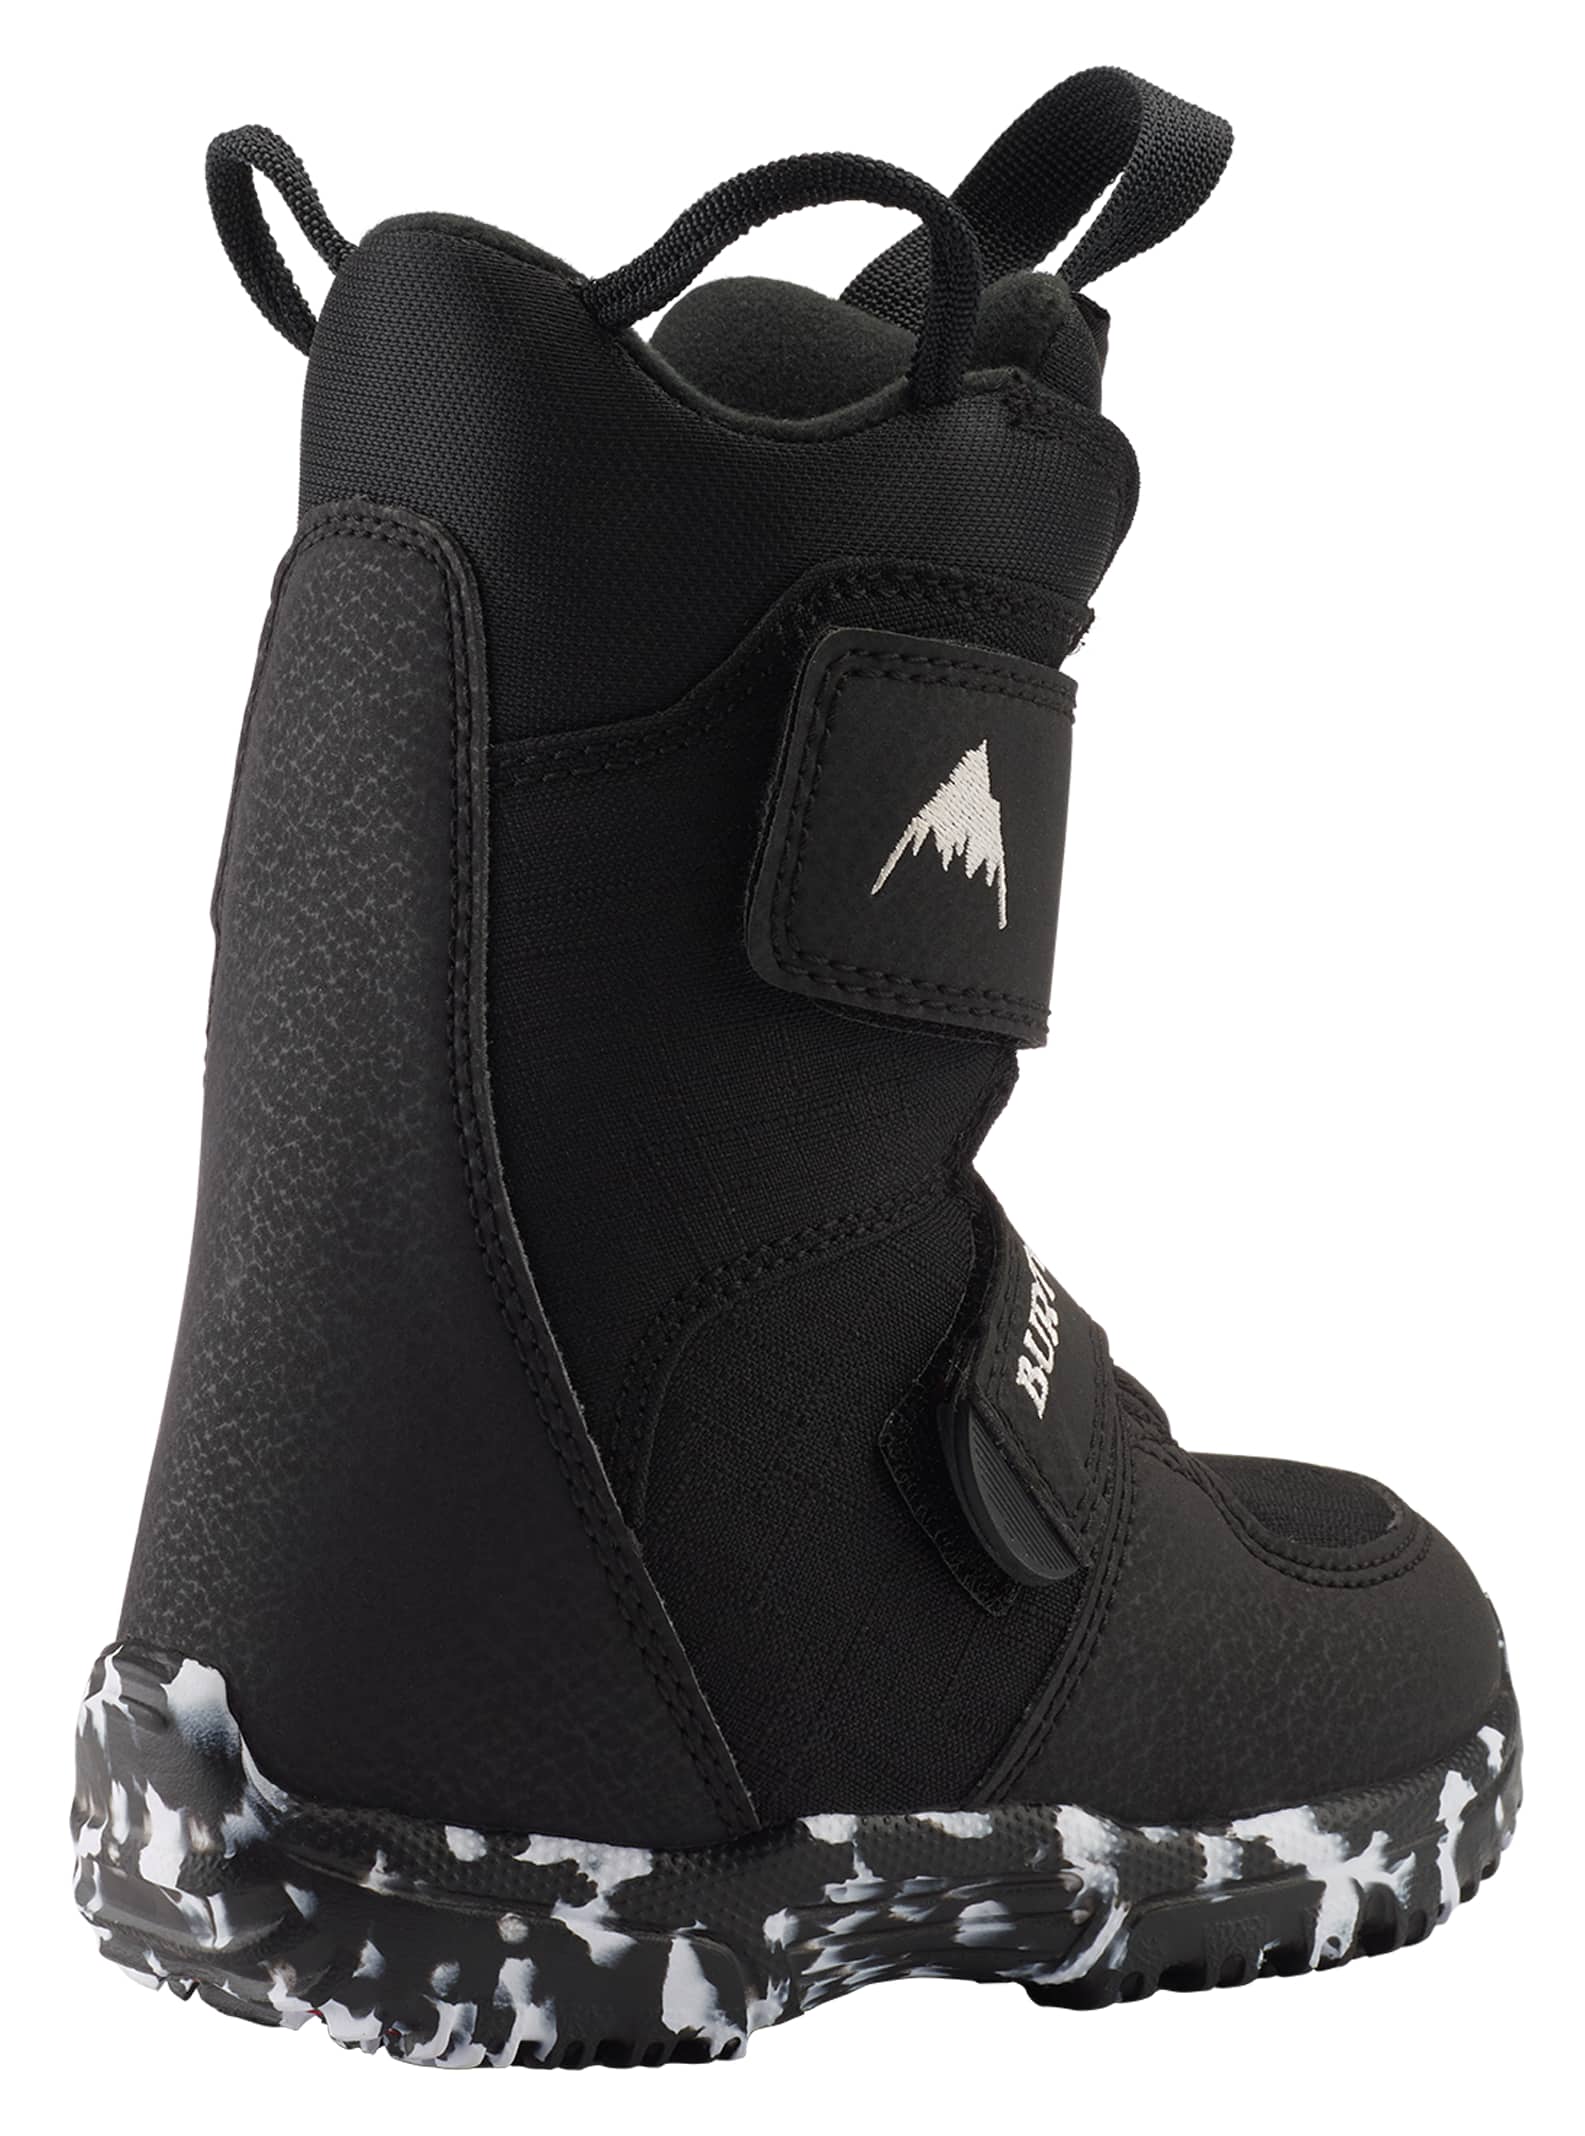 Kids' Snowboard Boots | Burton Snowboards US